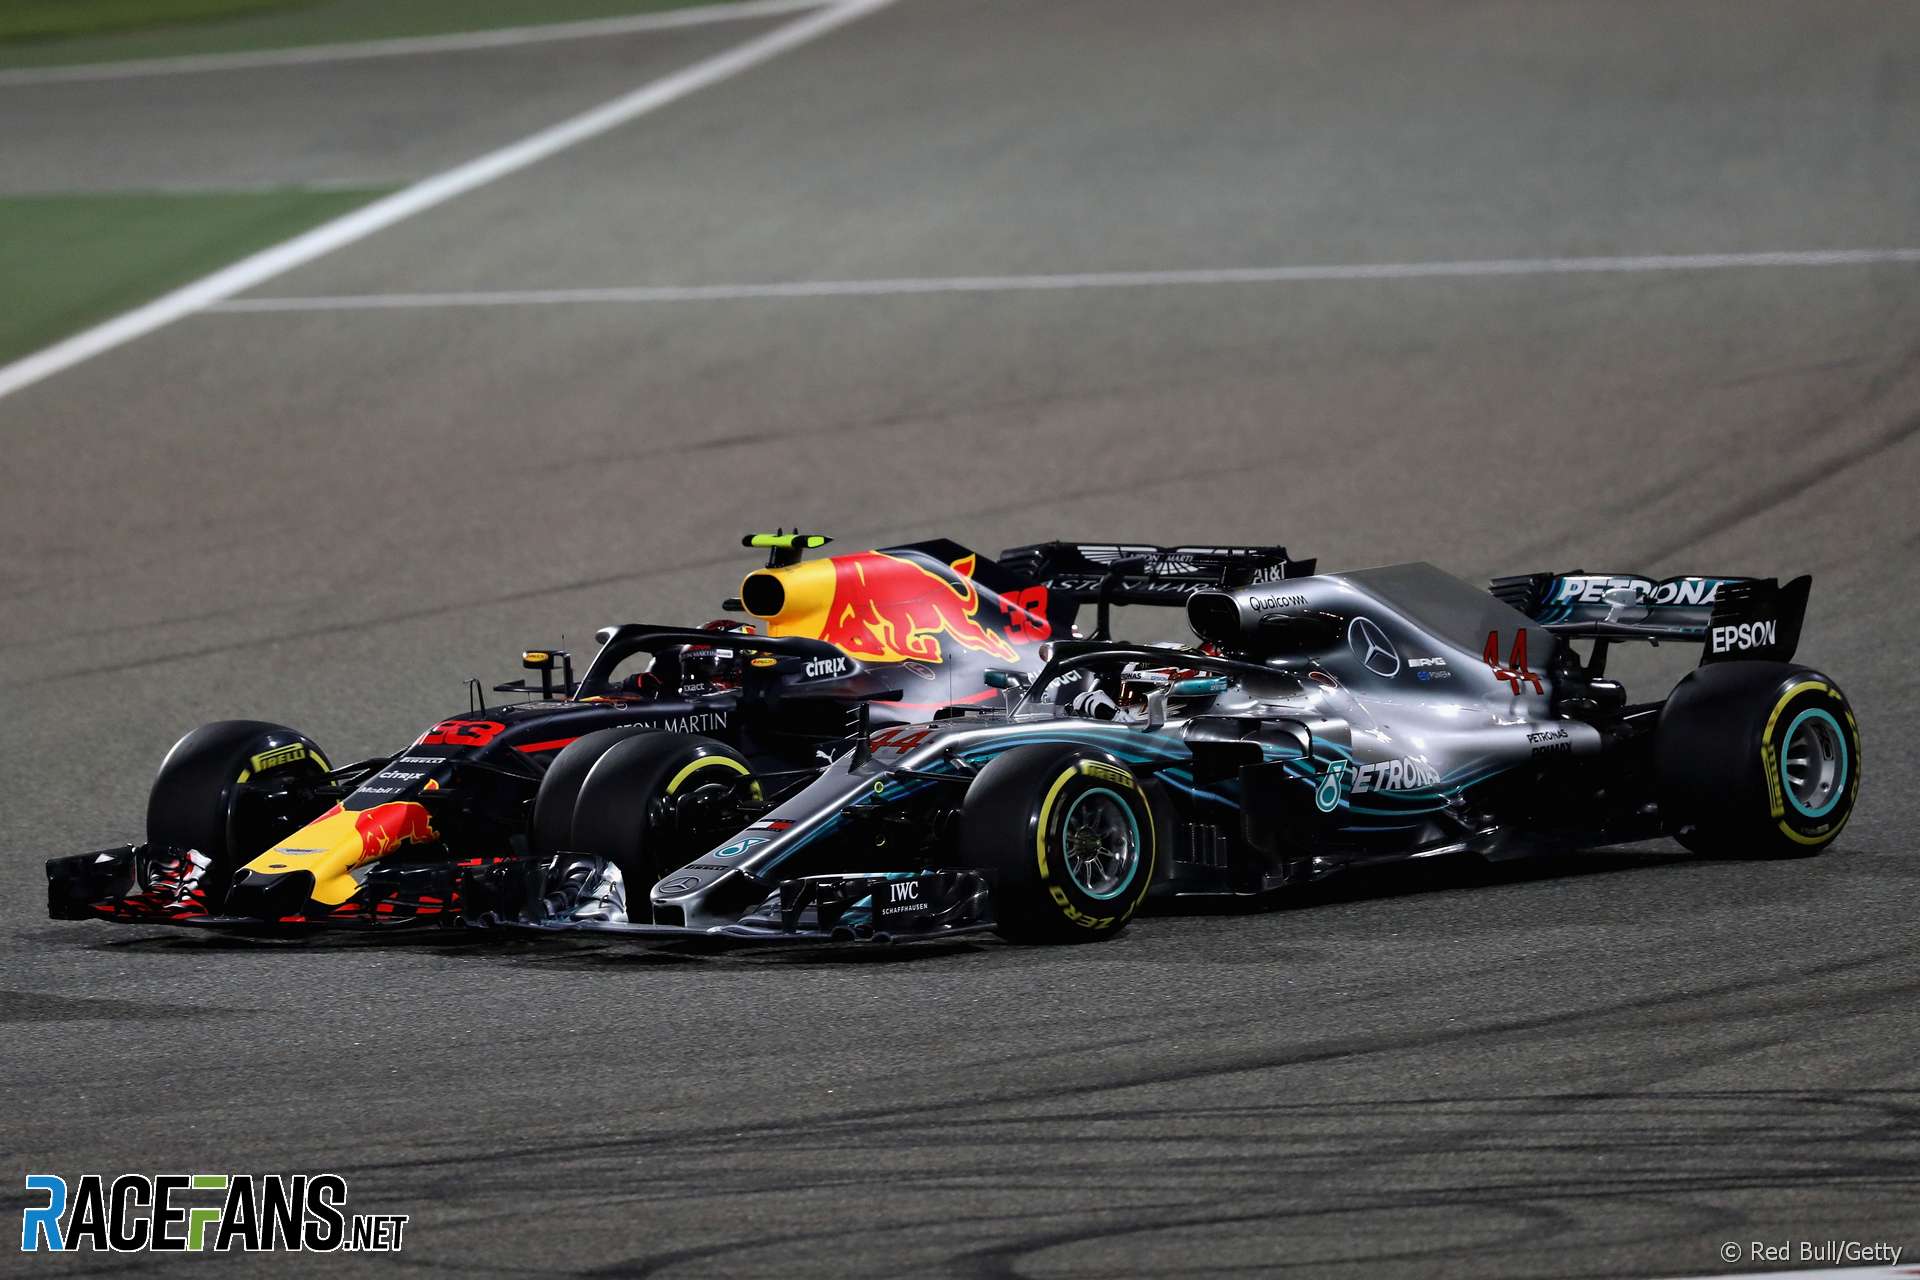 Max Verstappen, Lewis Hamilton, Bahrain Internatinoal Circuit, 2018